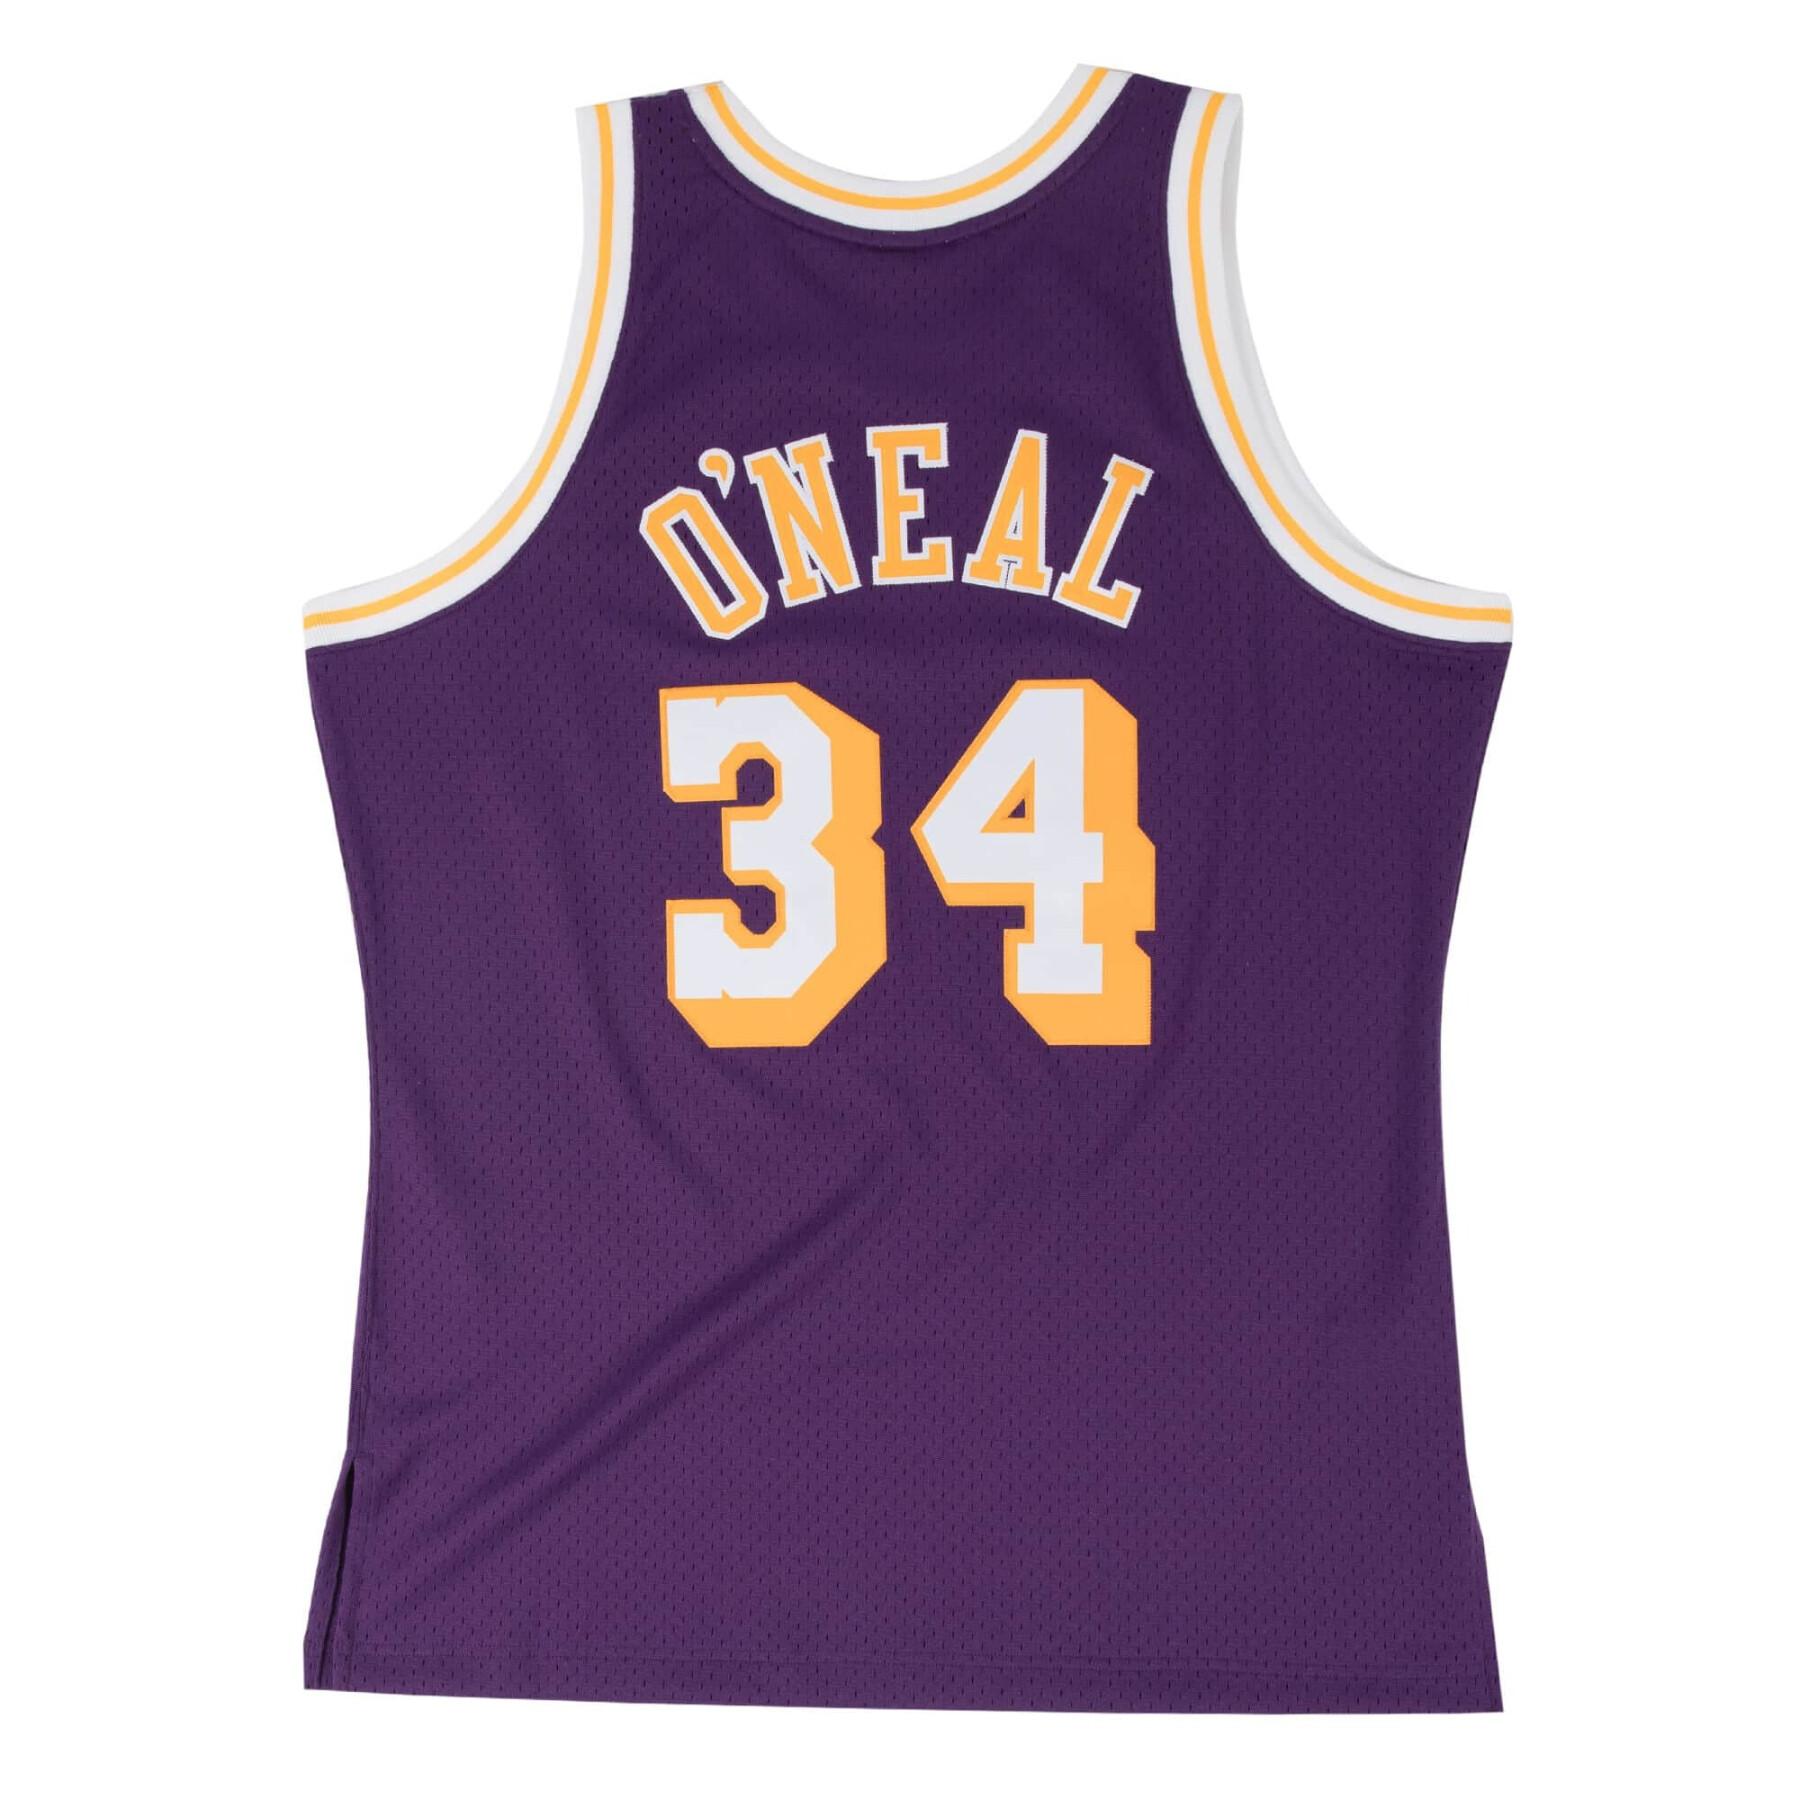 Swingman-Trikot Los Angeles Lakers Shaquille O'neal